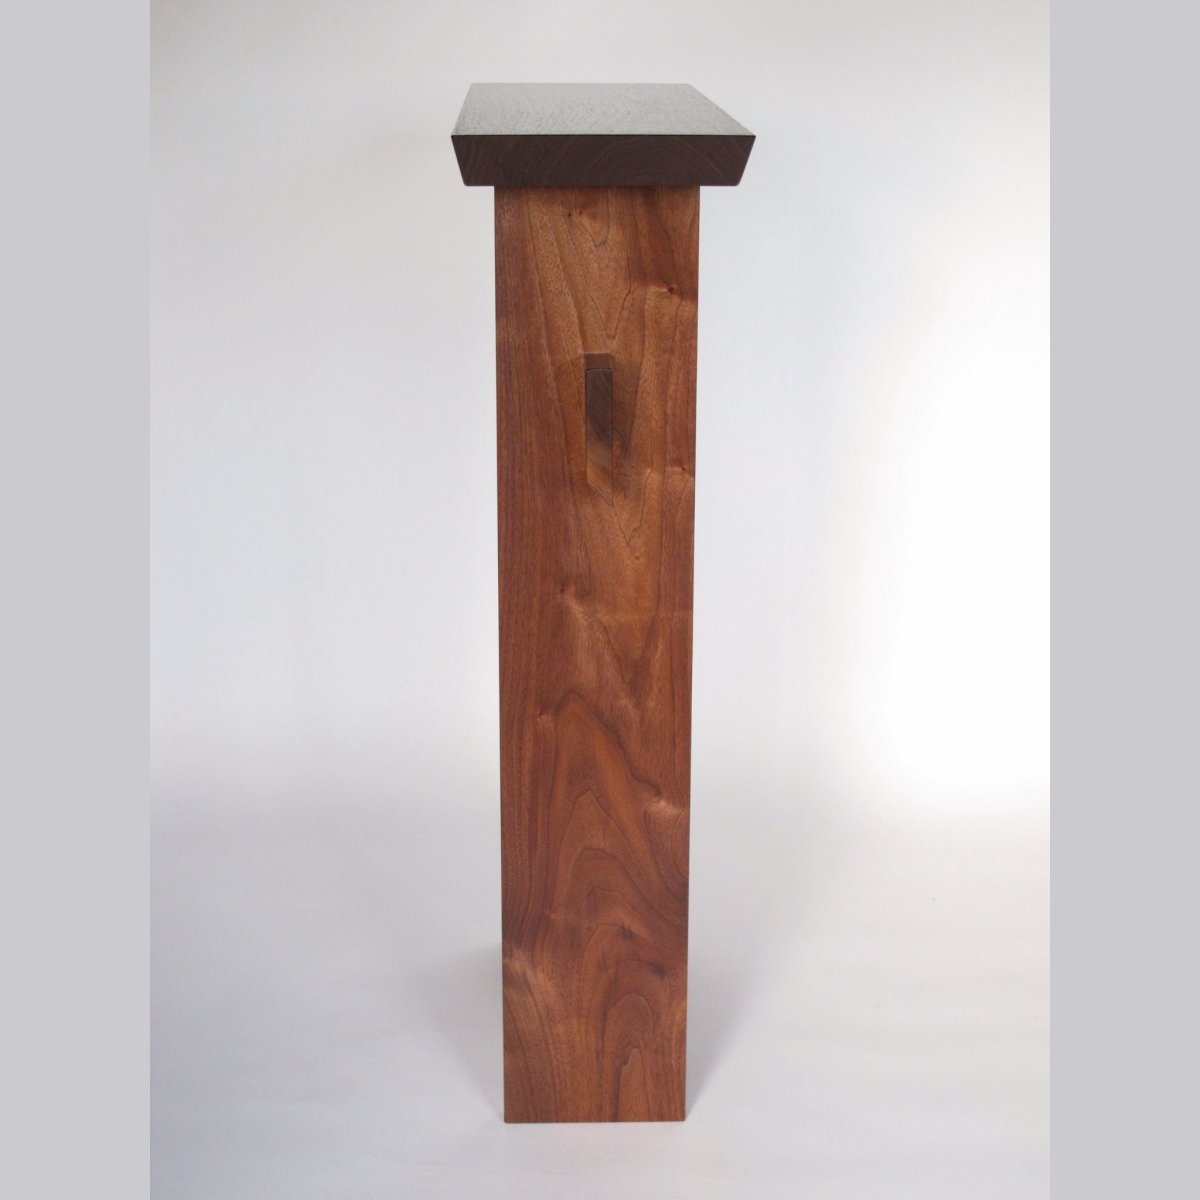 a narrow hall table modern walnut wood furniture design by Mokuzai Furniture